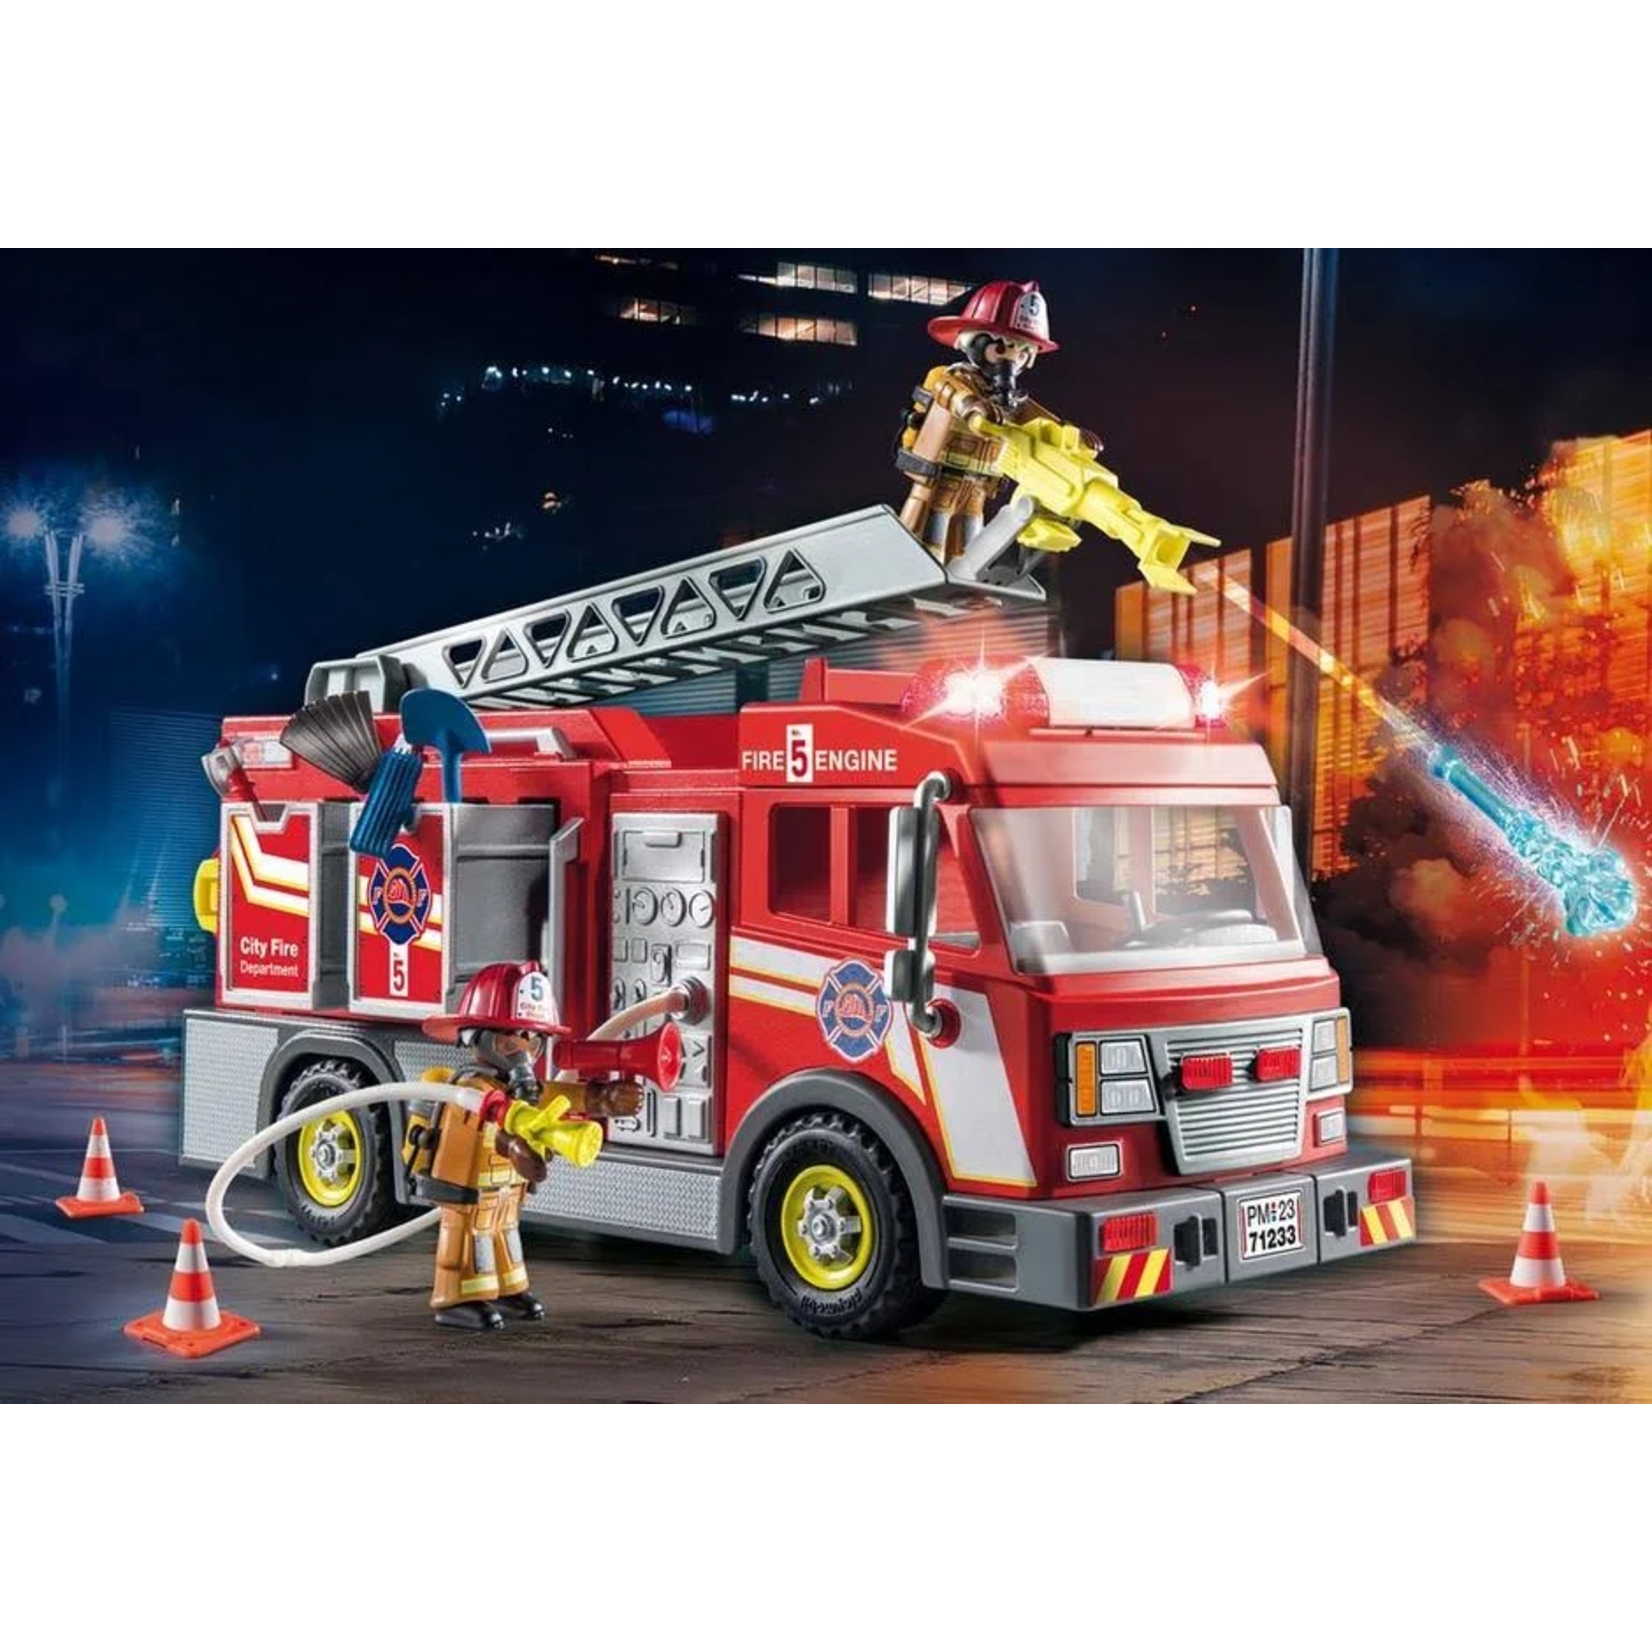 Playmobil Fire Truck - Playmobil 71233